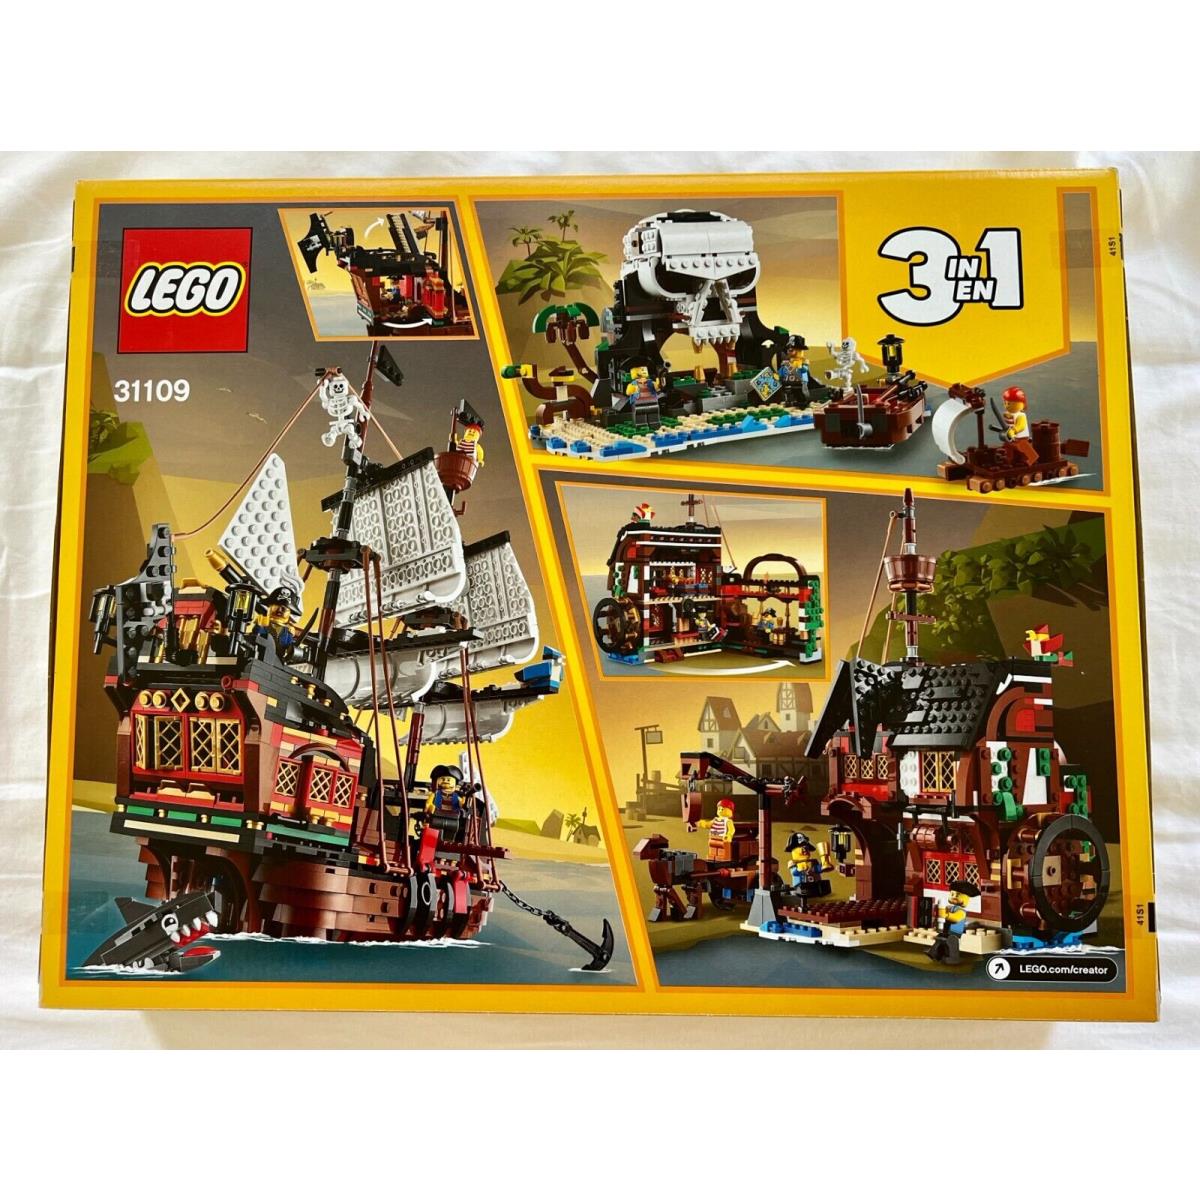 Lego 31109 Pirate Ship Creator 3in1 - in Box